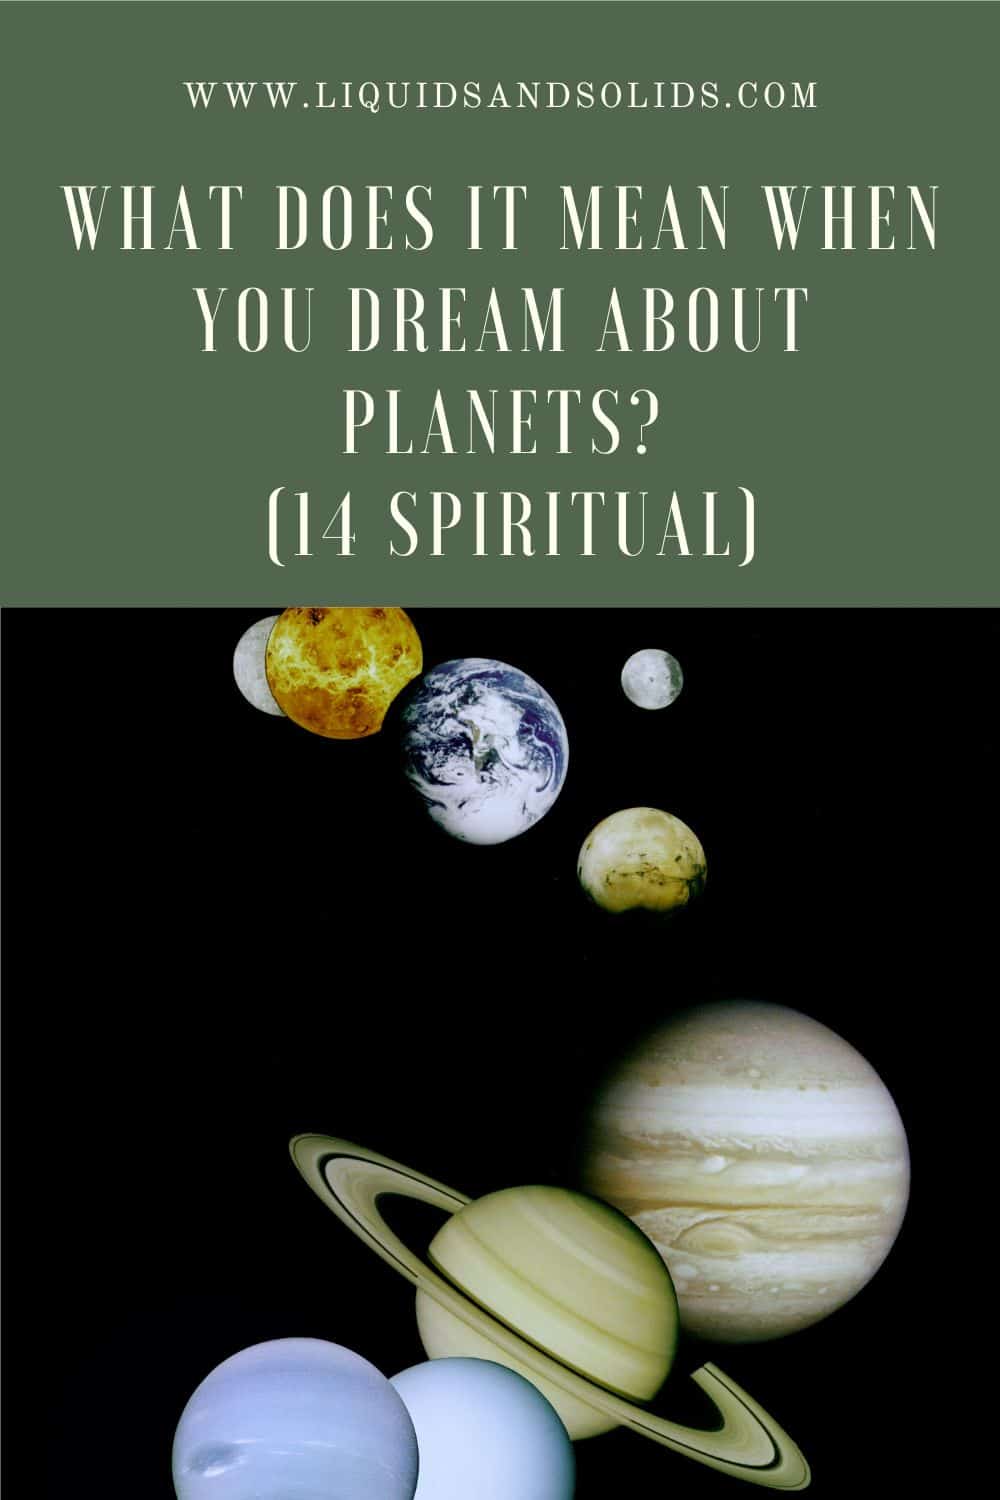  Drøm om planeter? (14 spirituelle betydninger)